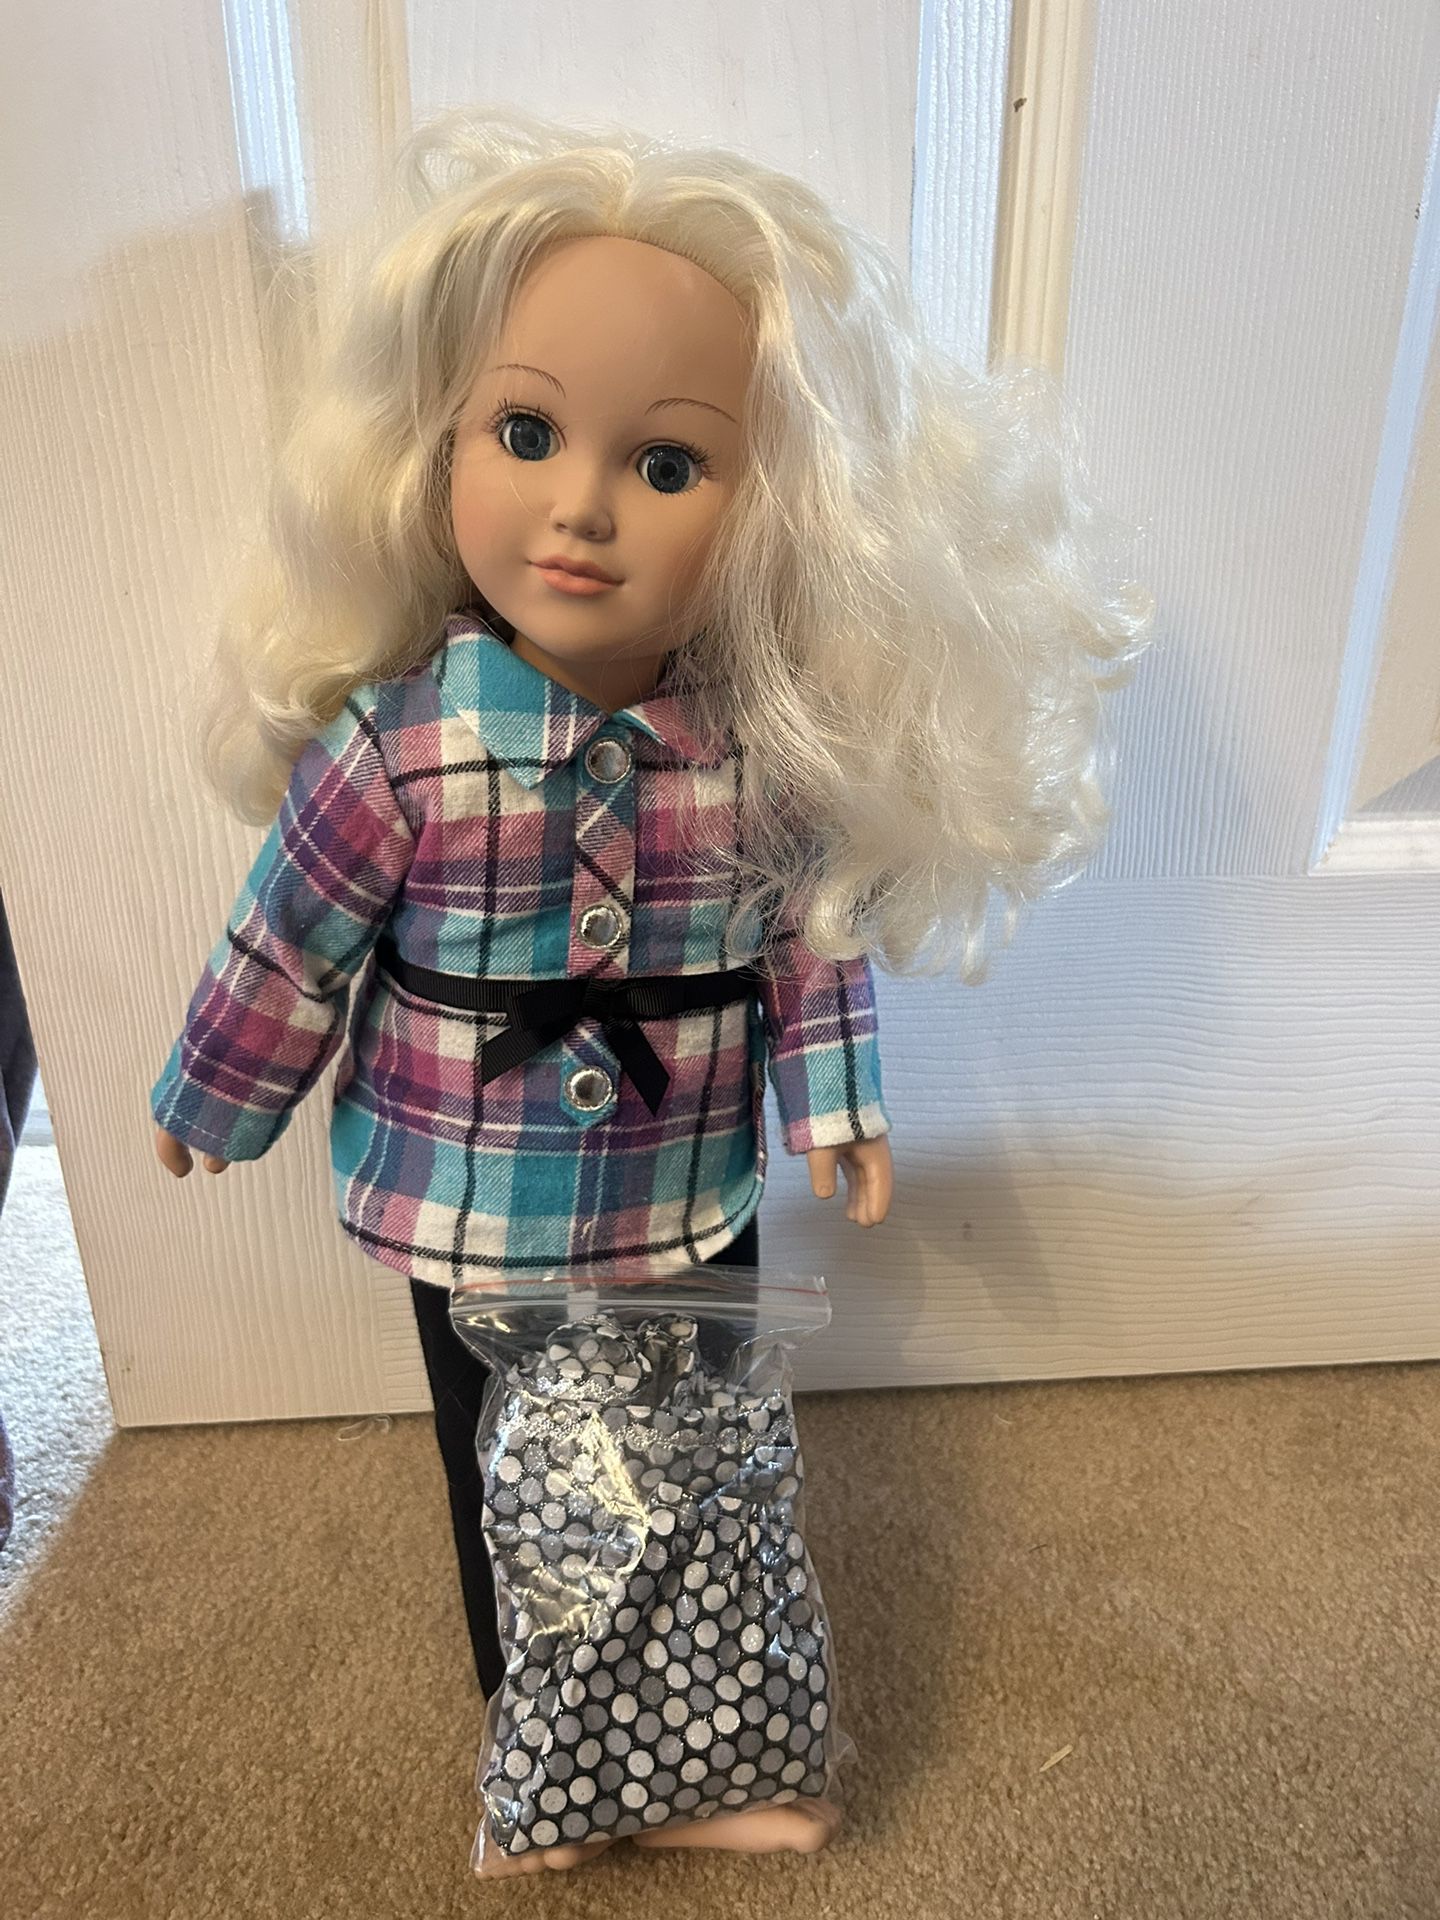 Target’s Version Of American girl Doll